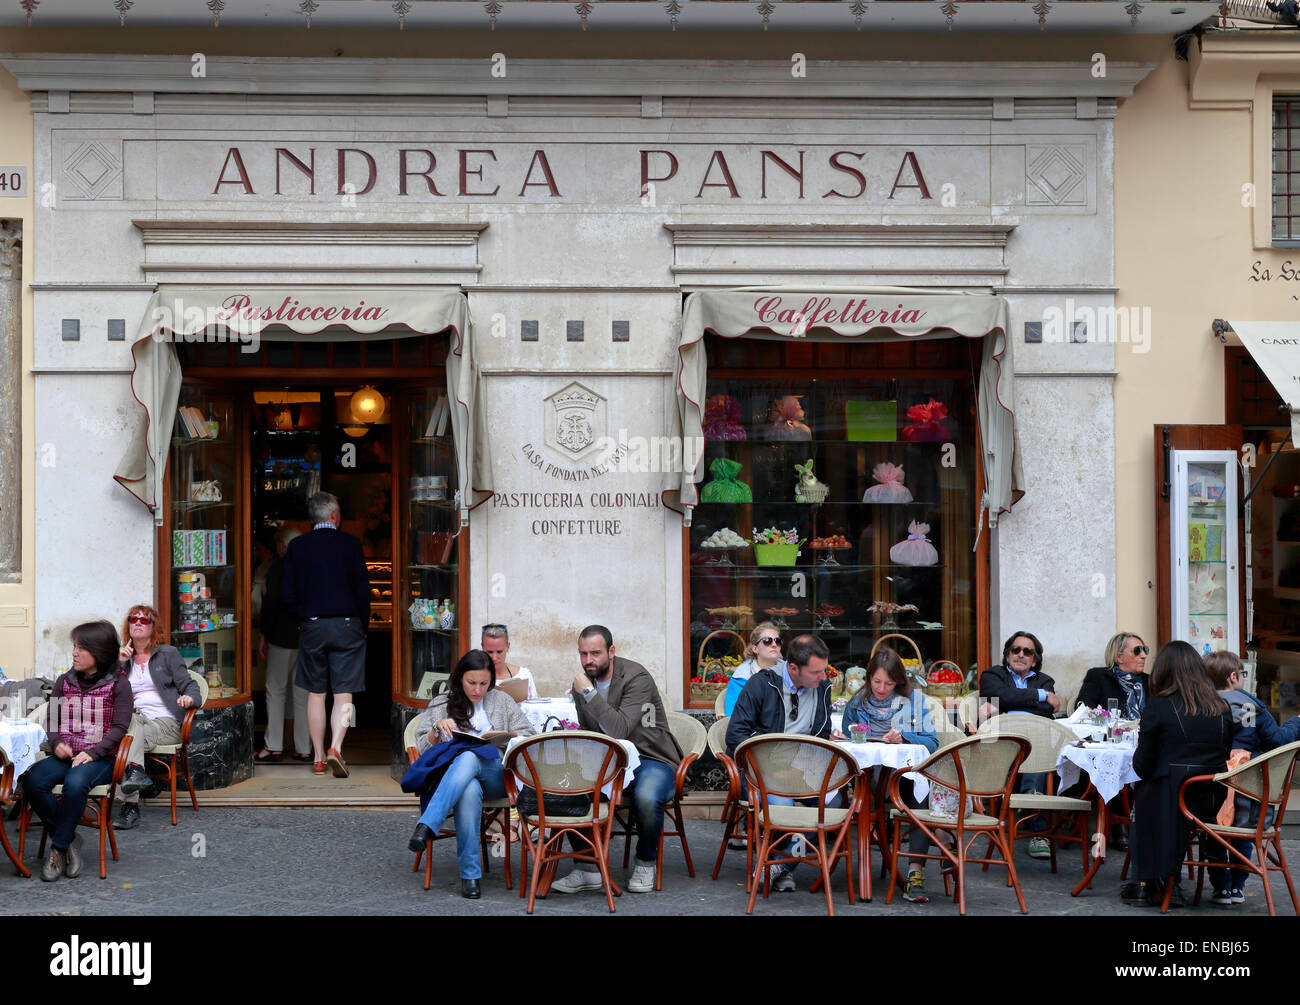 Tourists sat outside Pasticceria Andrea Pansa in Piazza Duomo, Amalfi, Italy. Stock Photo